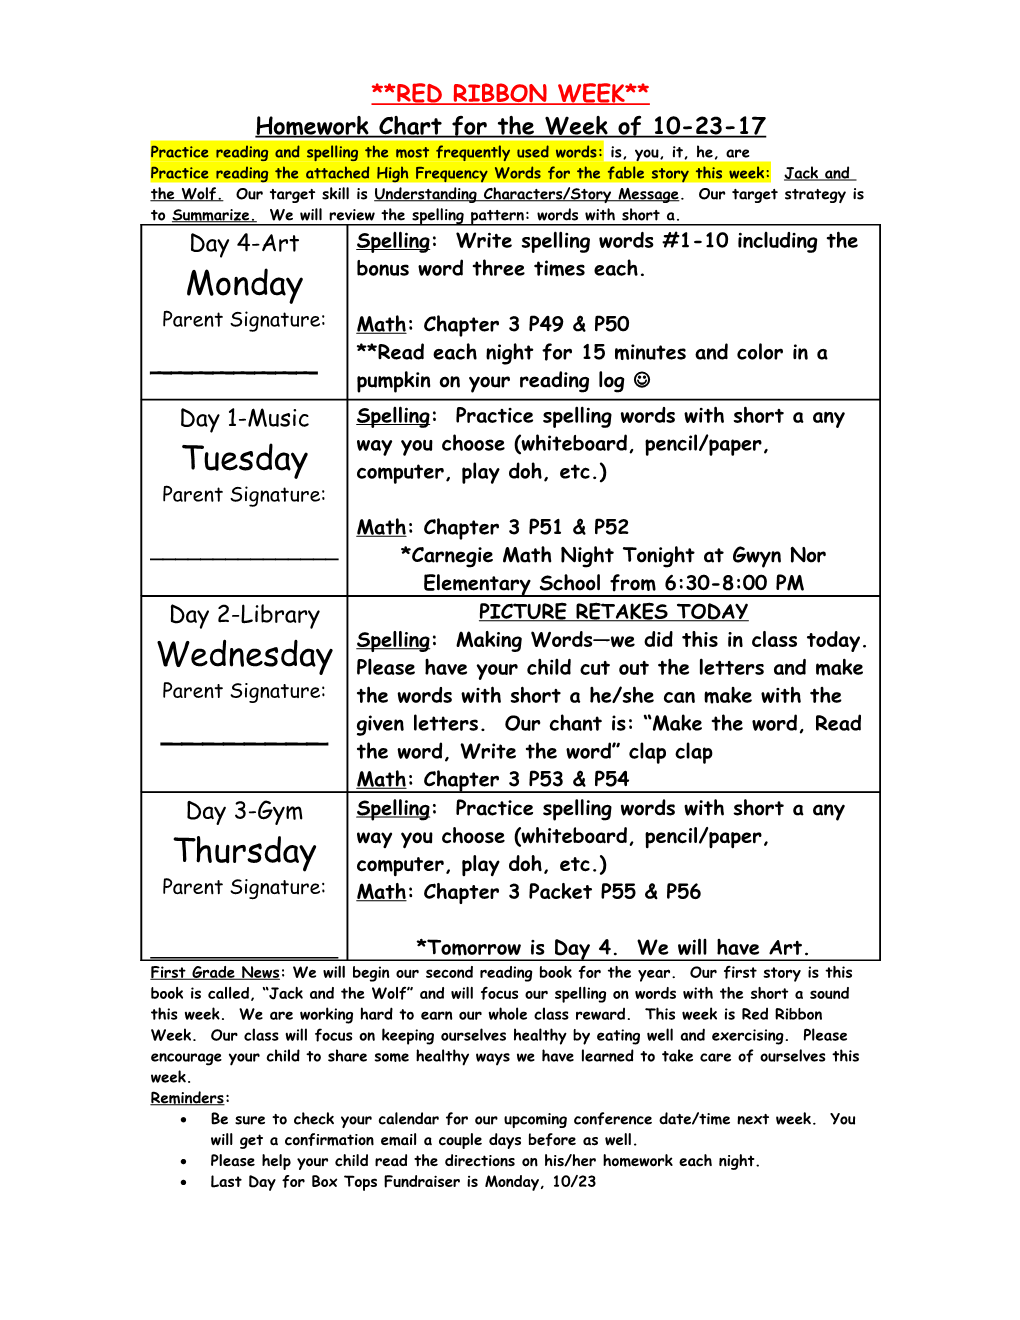 Homework Chart for the Week of 10-23-17